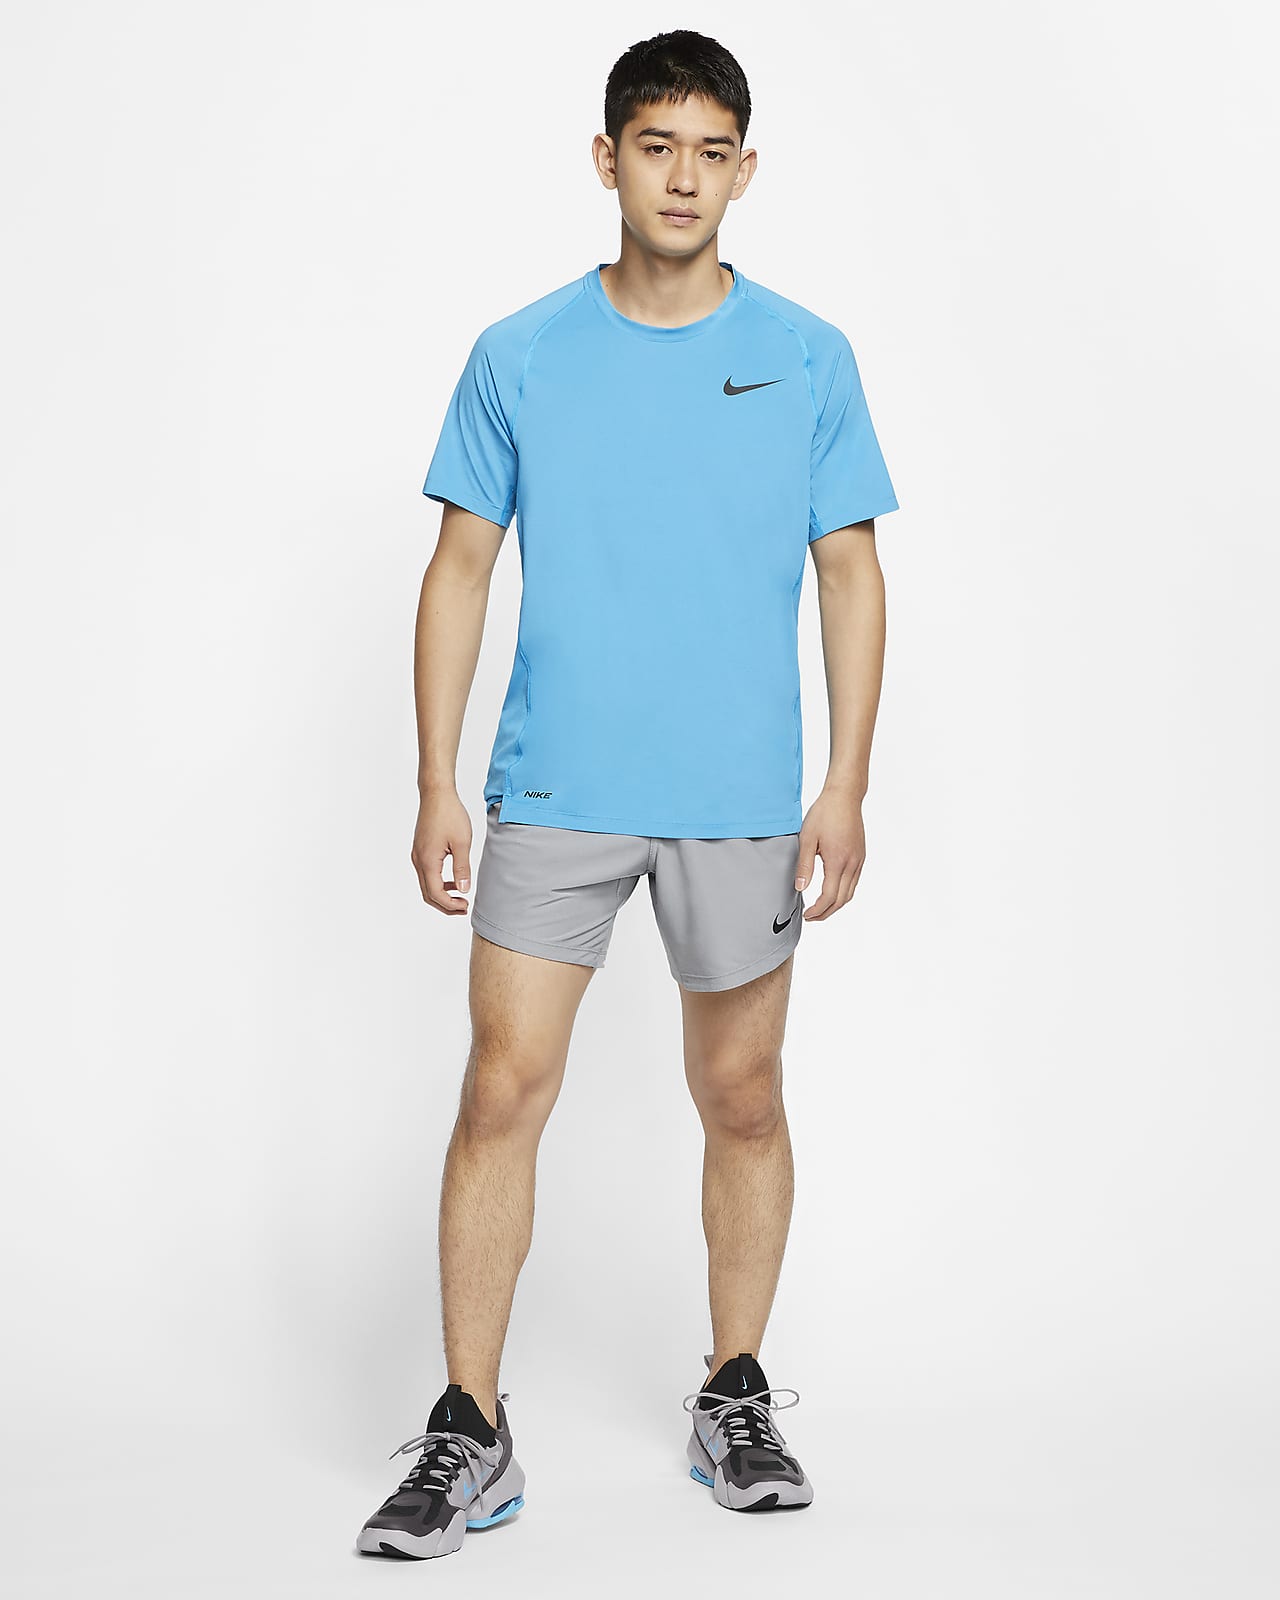 nike pro men's training shorts